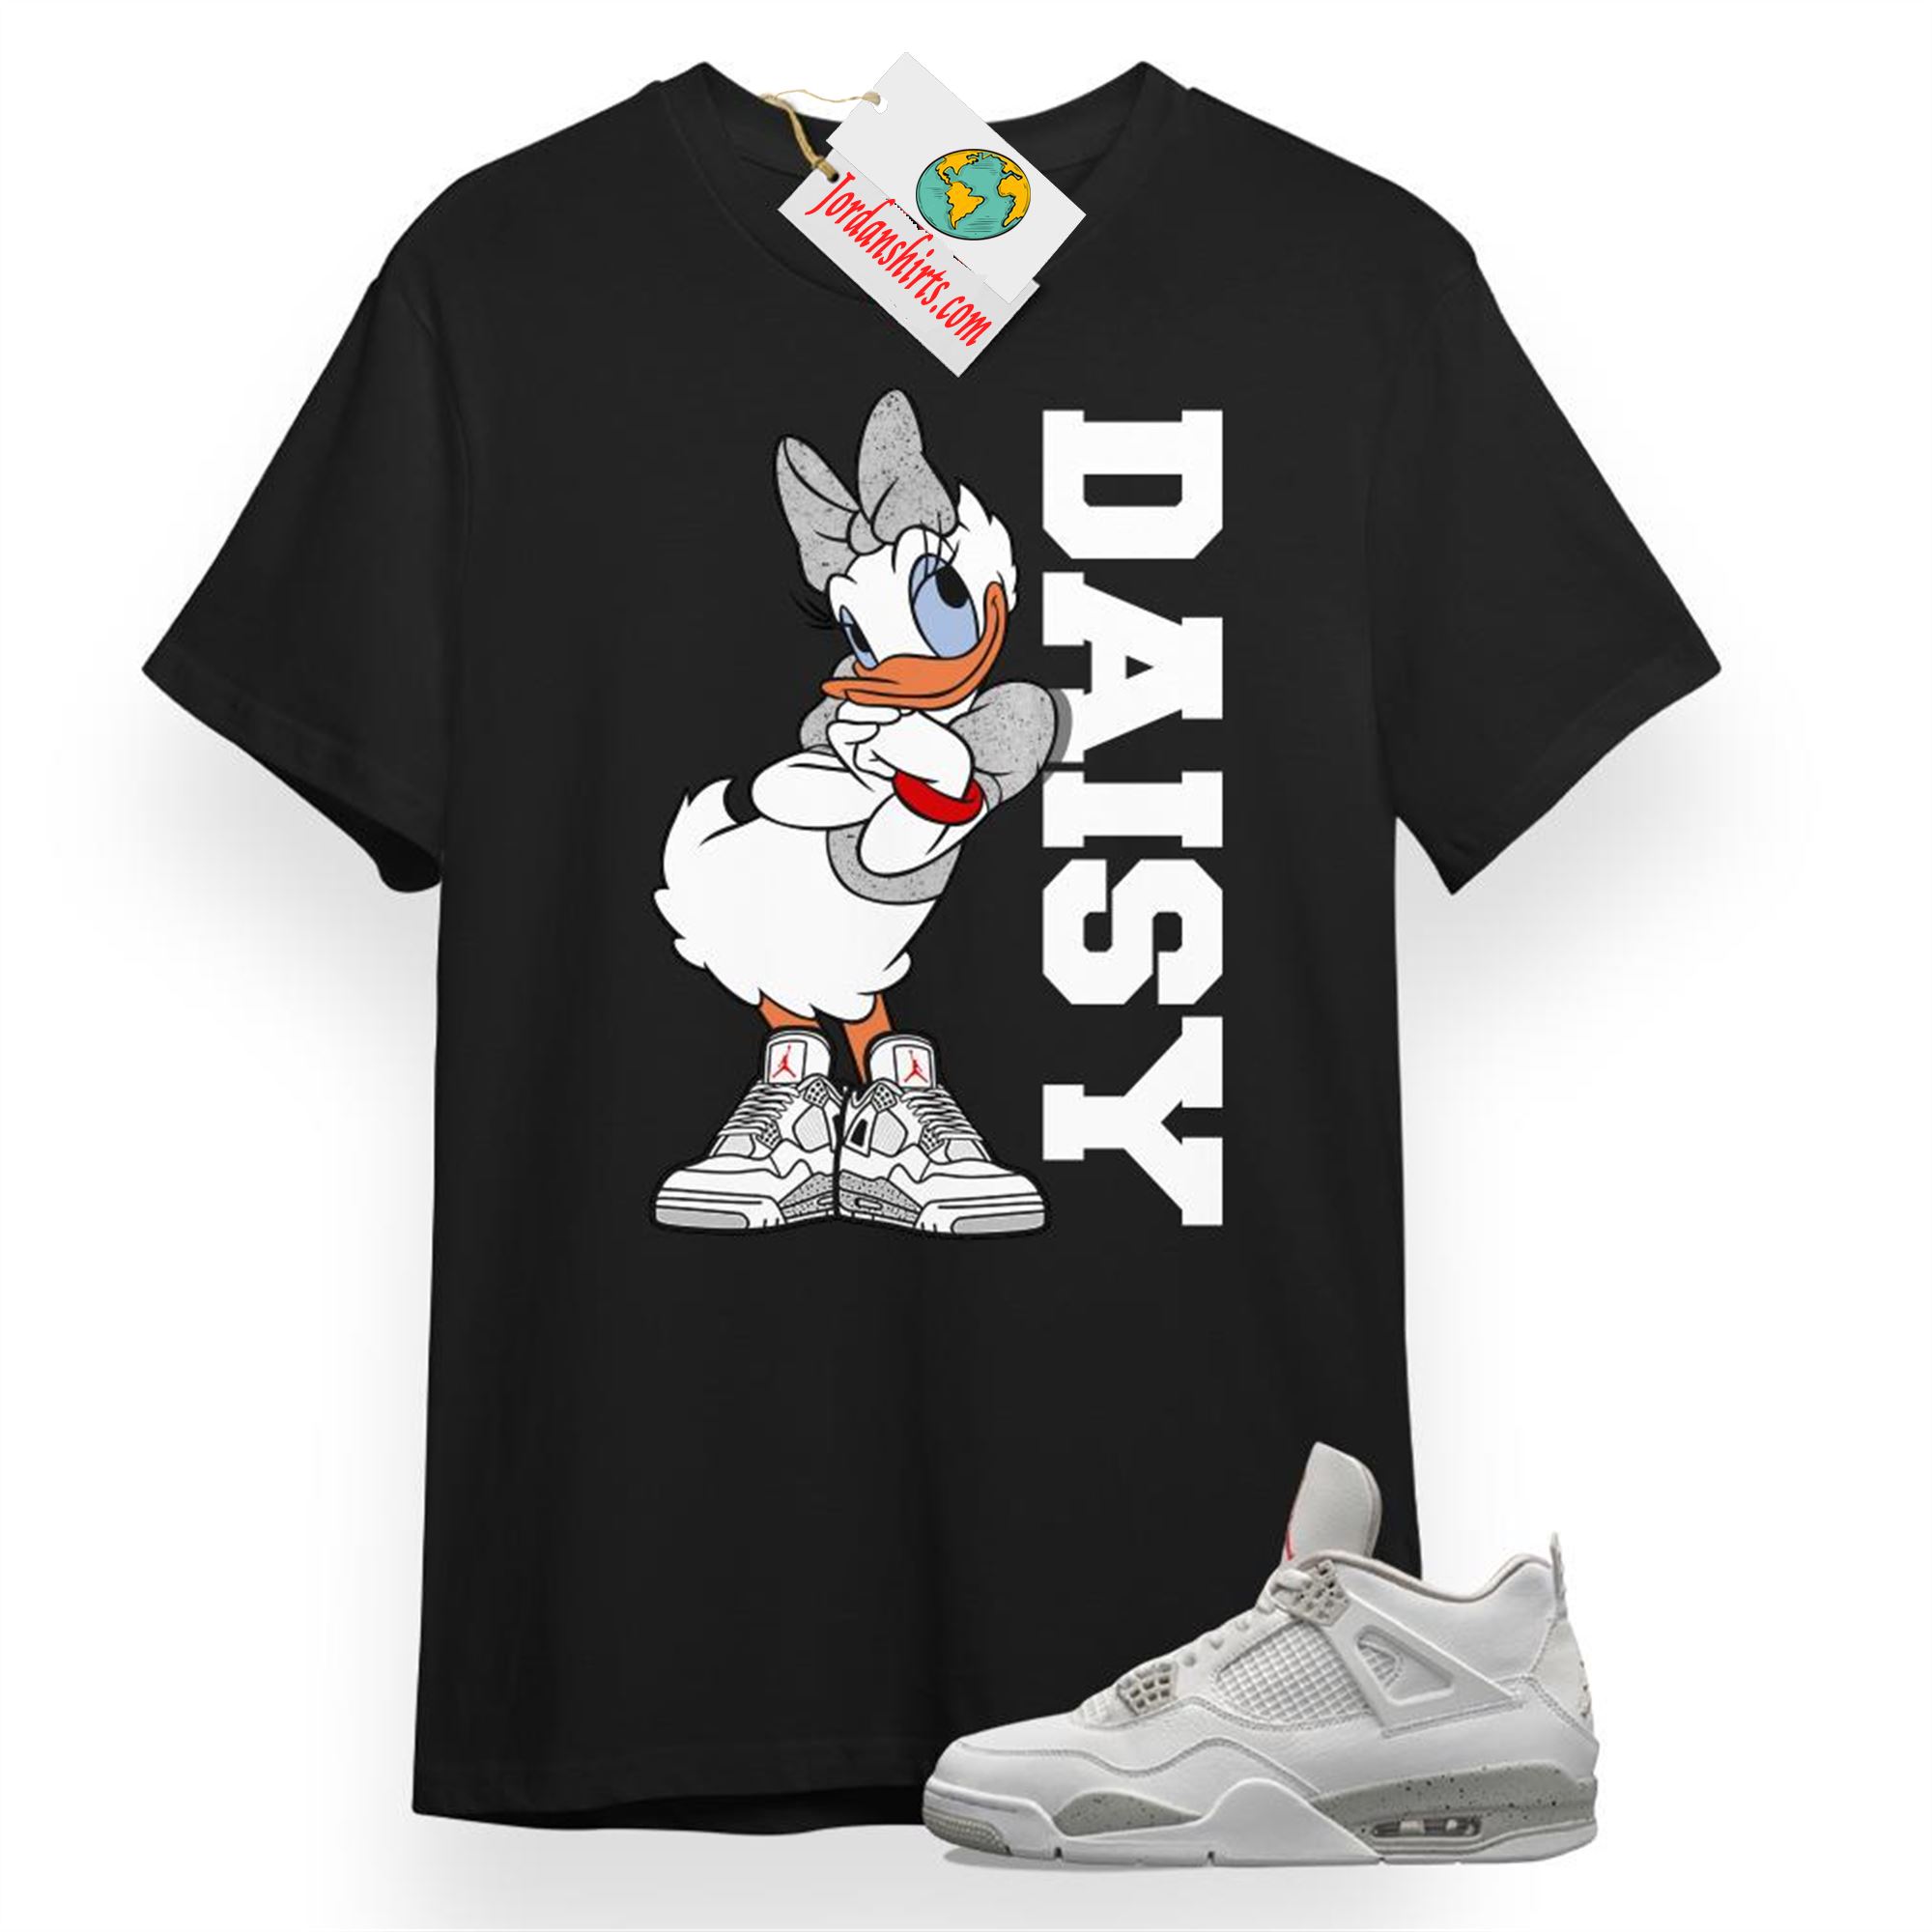 Jordan 4 Shirt, Daisy Black T-shirt Air Jordan 4 Oreo 4s Full Size Up To 5xl